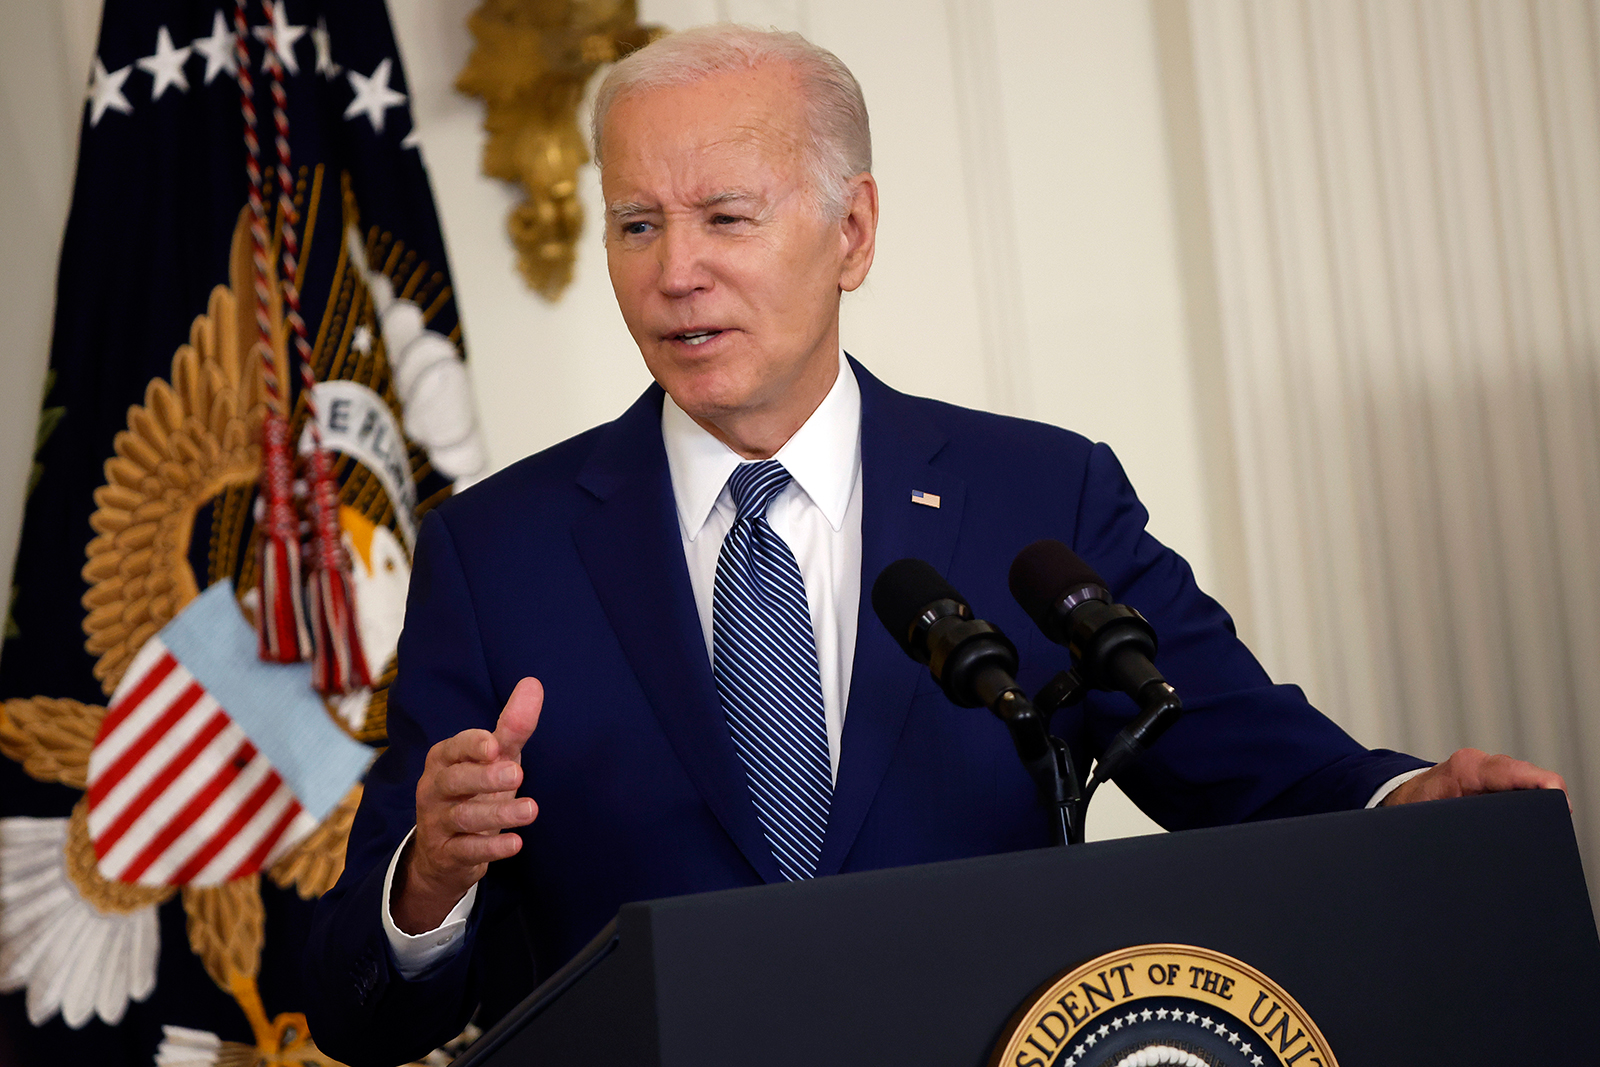 Joe Biden speaks during an event in Washington, DC. on June 26.